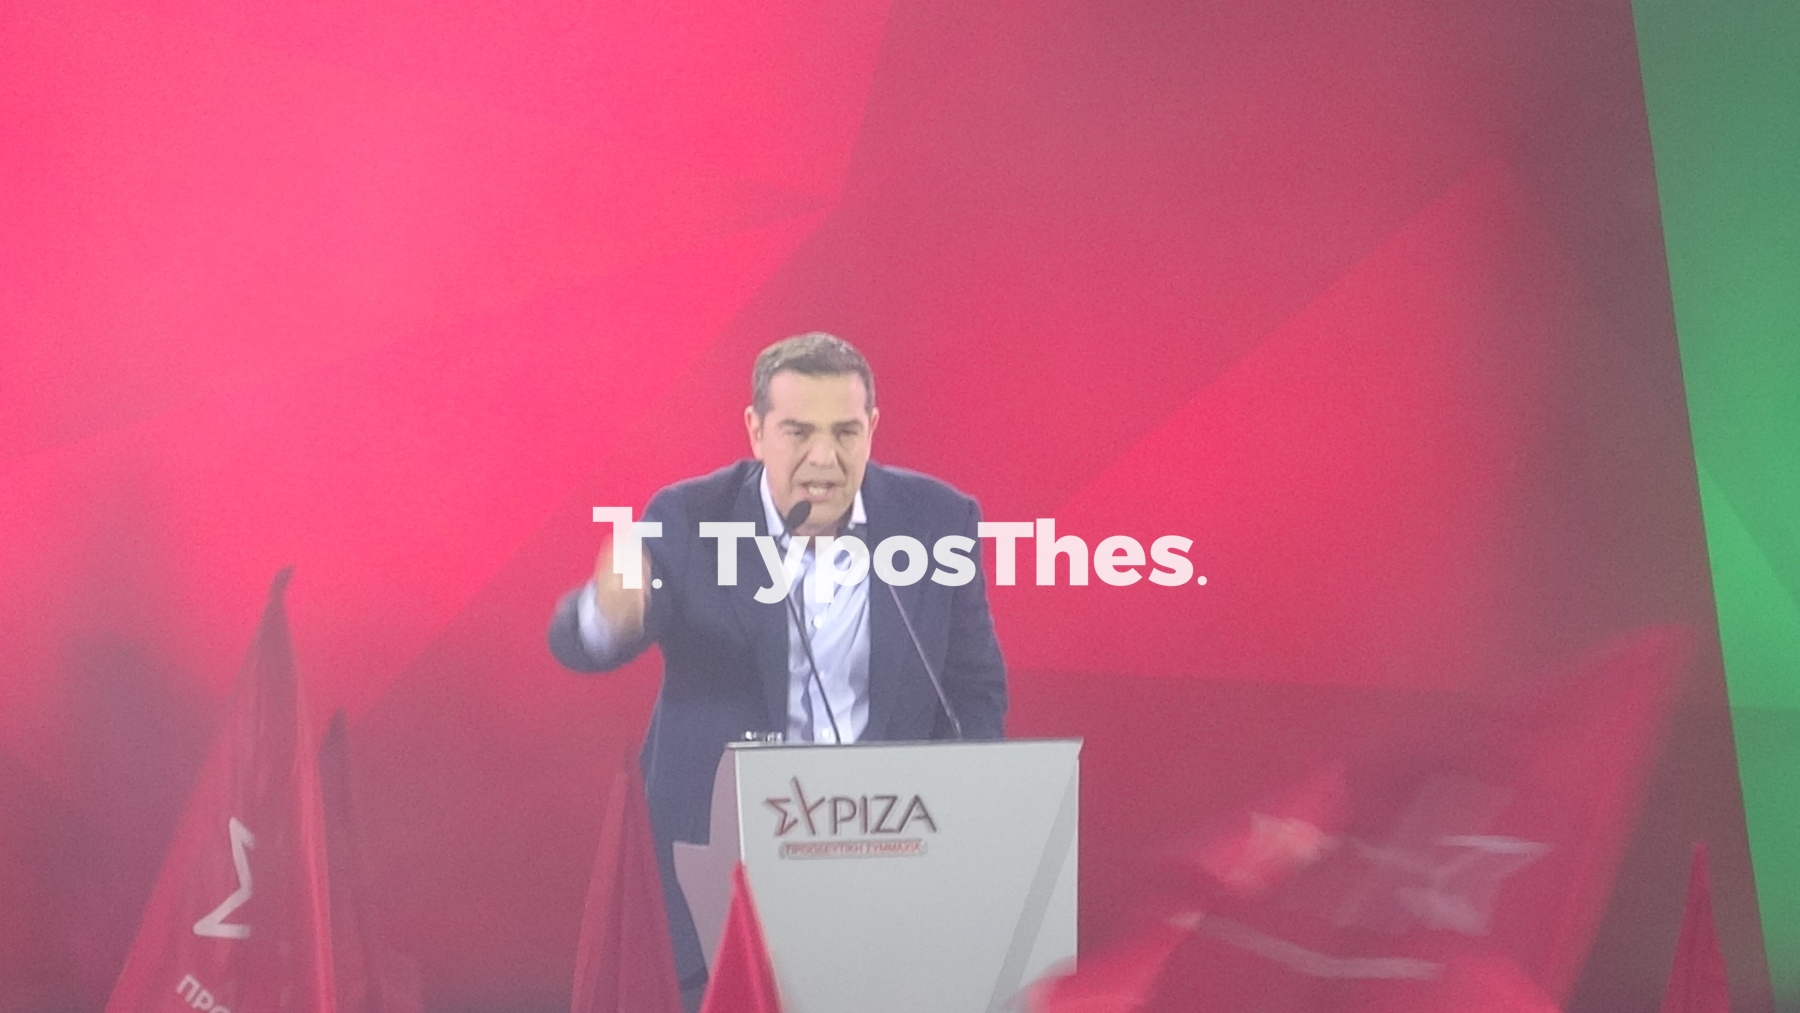 tsipras4.jpg